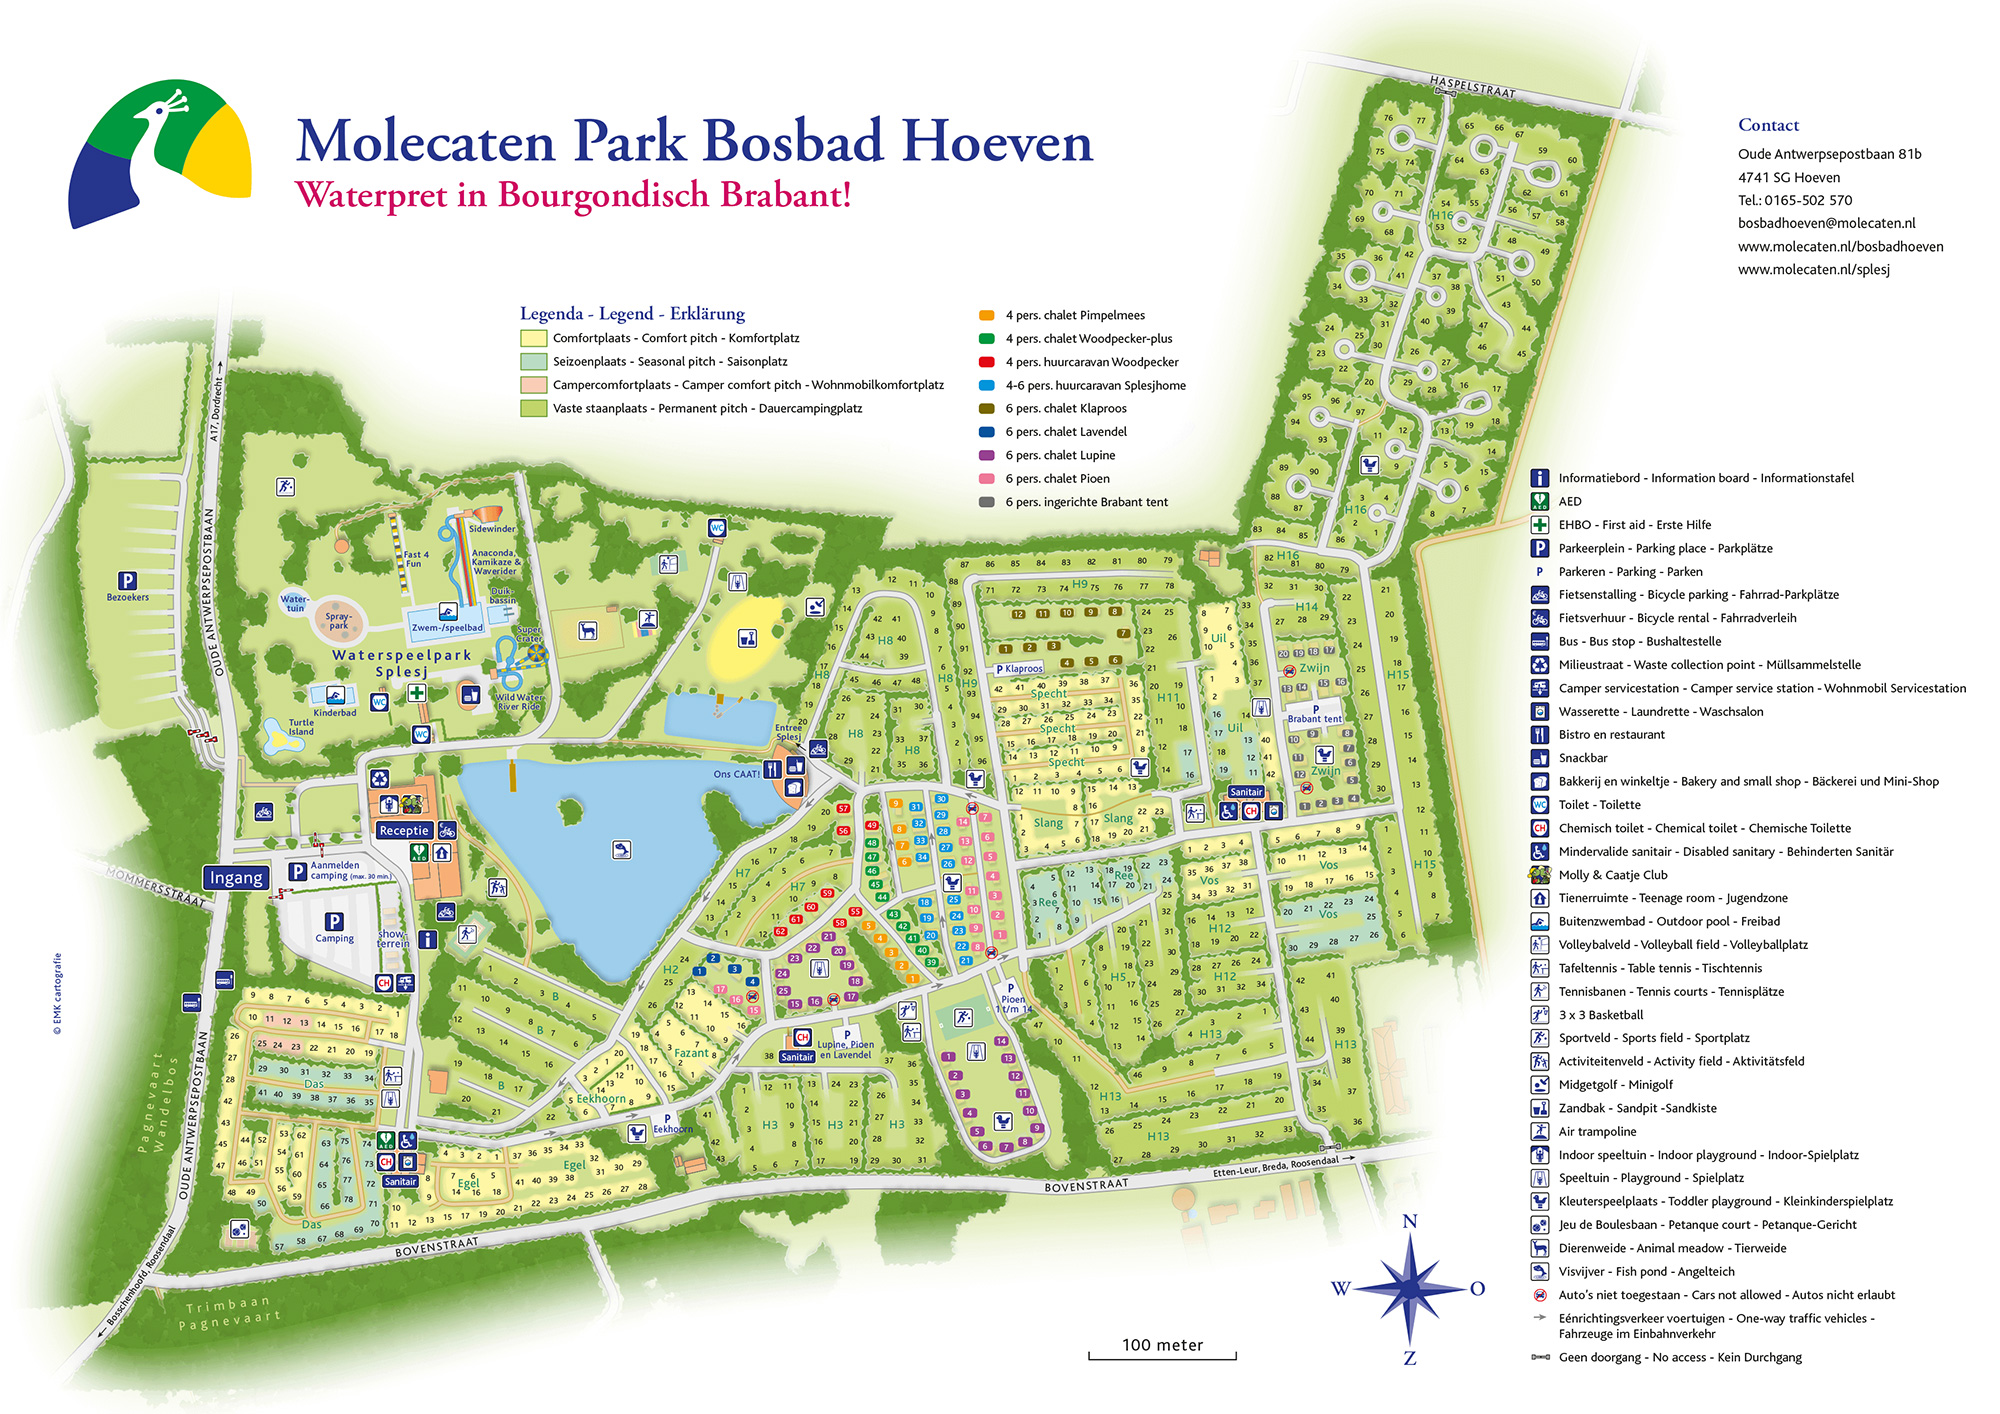 Molecaten Park Bosbad Hoeven